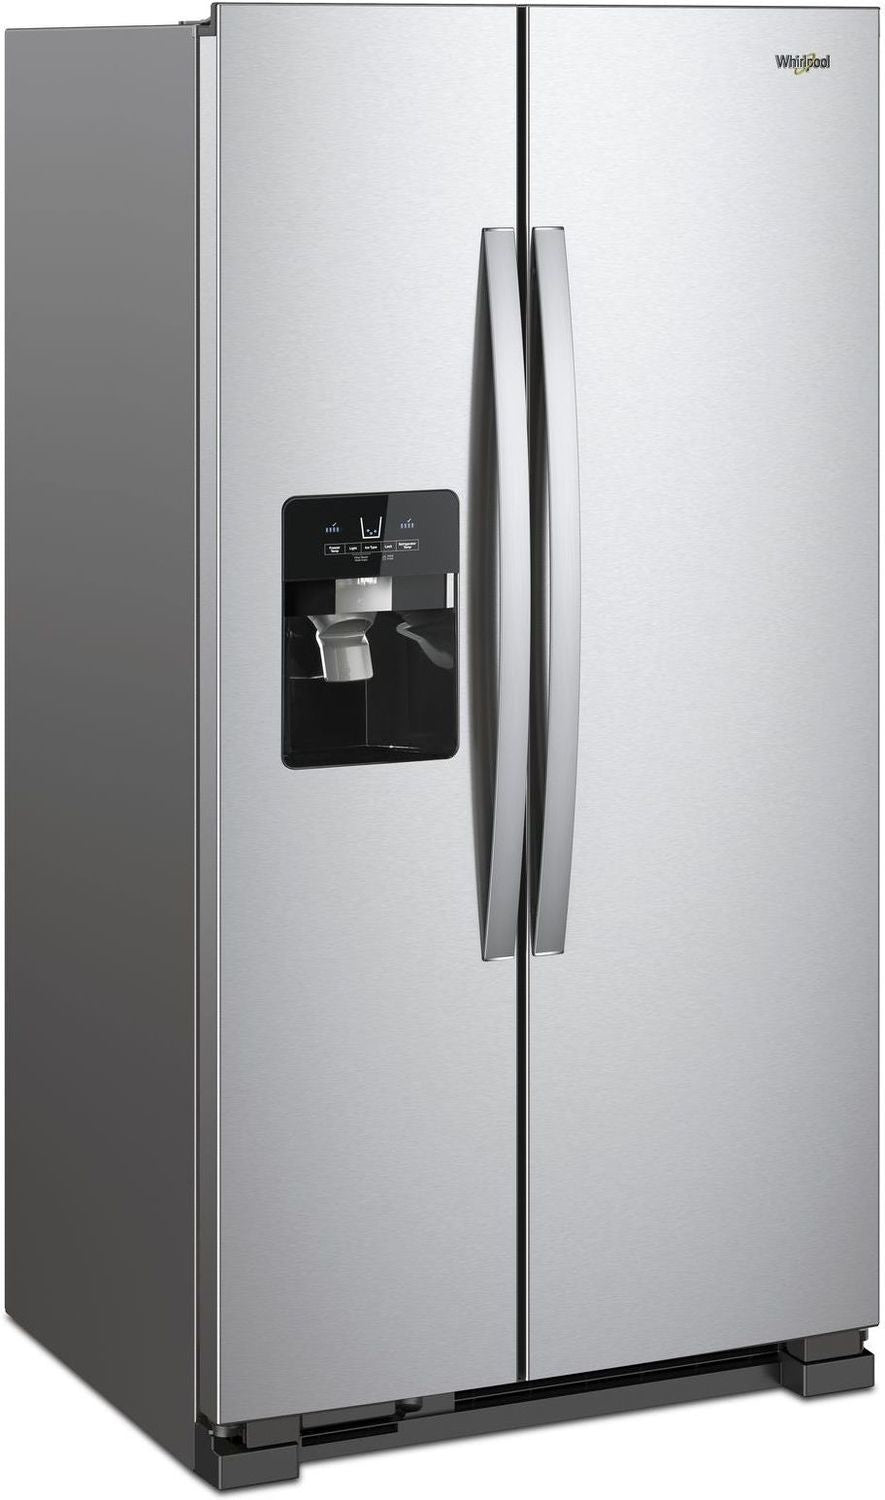 Whirlpool Stainless Steel SidebySide Refrigerator (25 Cu. Ft